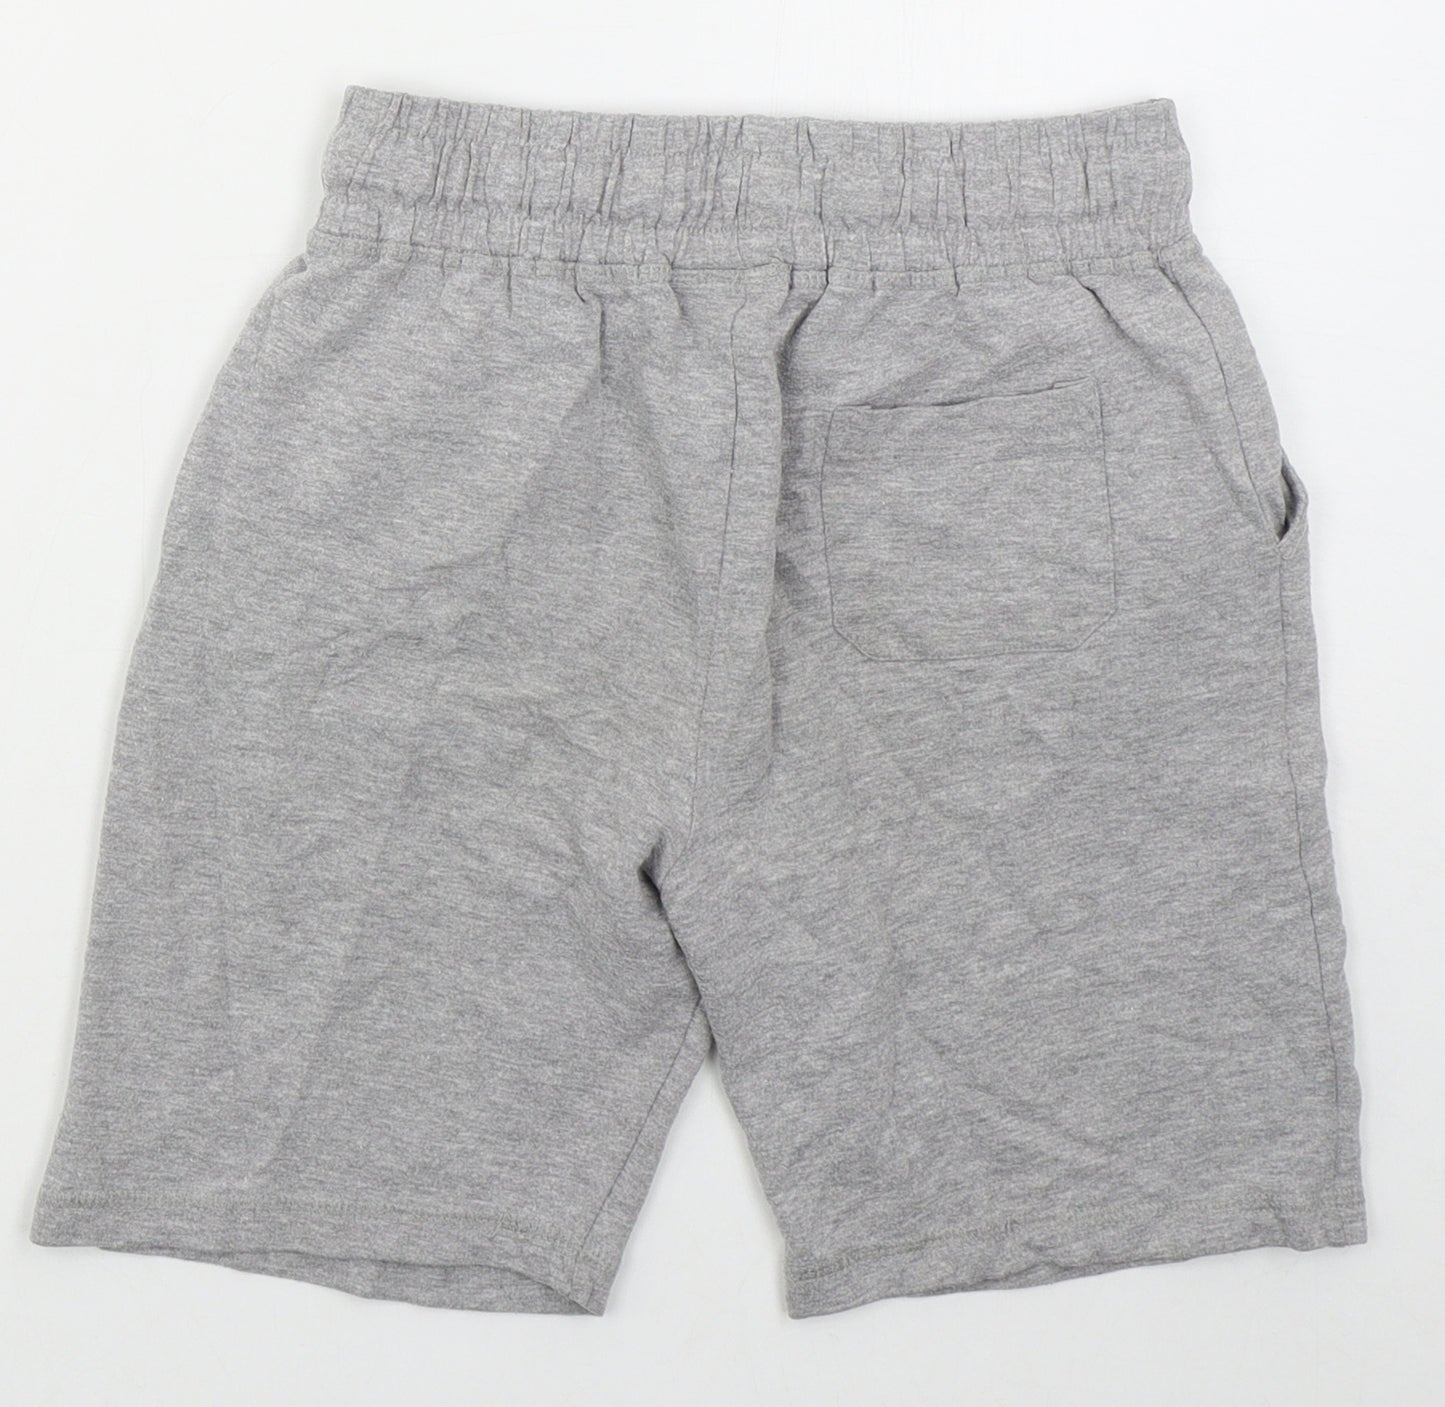 Urban Outlaws Boys Grey  Cotton Sweat Shorts Size 10-11 Years  Regular Drawstring